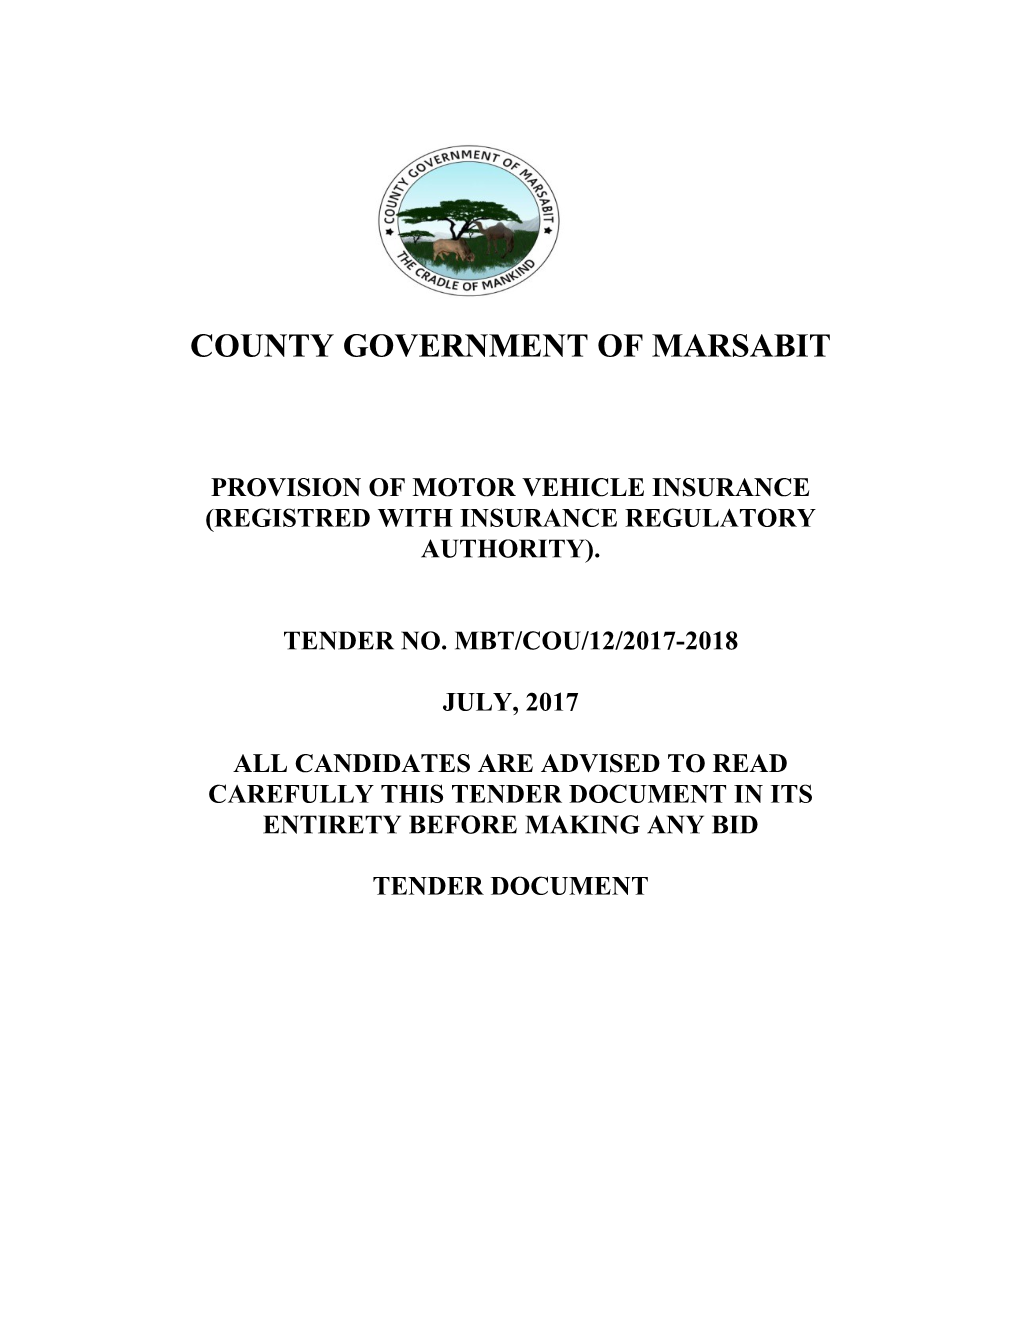 Provision of Motor Vehicle Insurance (Registred with Insurance Regulatory Authority)